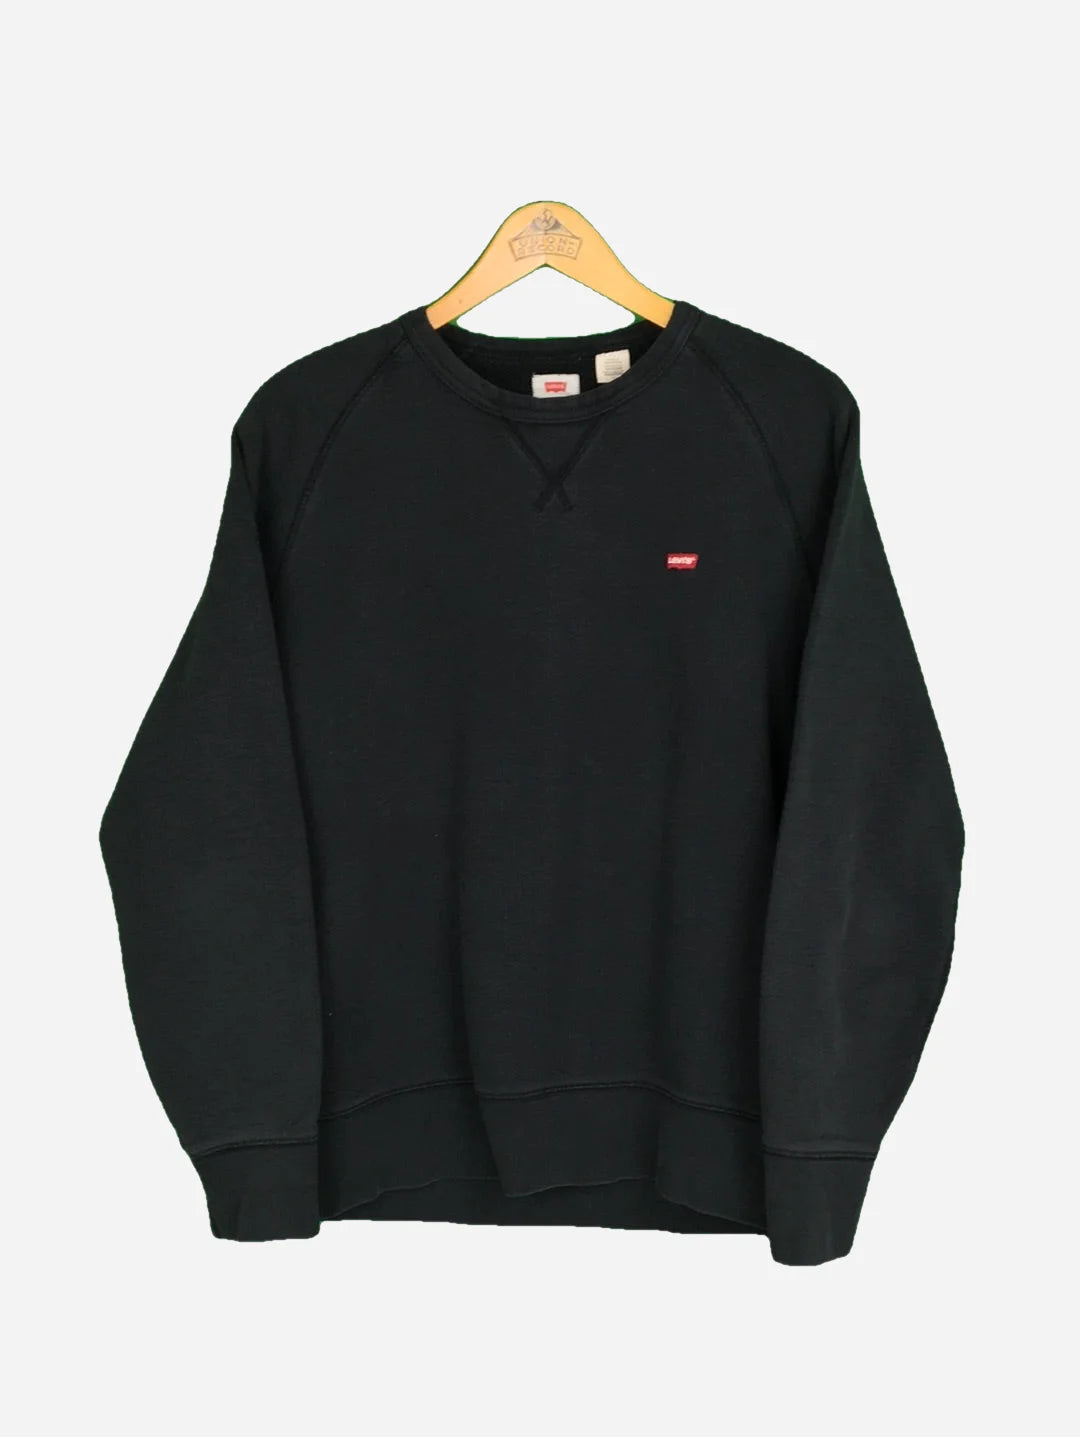 Levi’s Sweater (M)